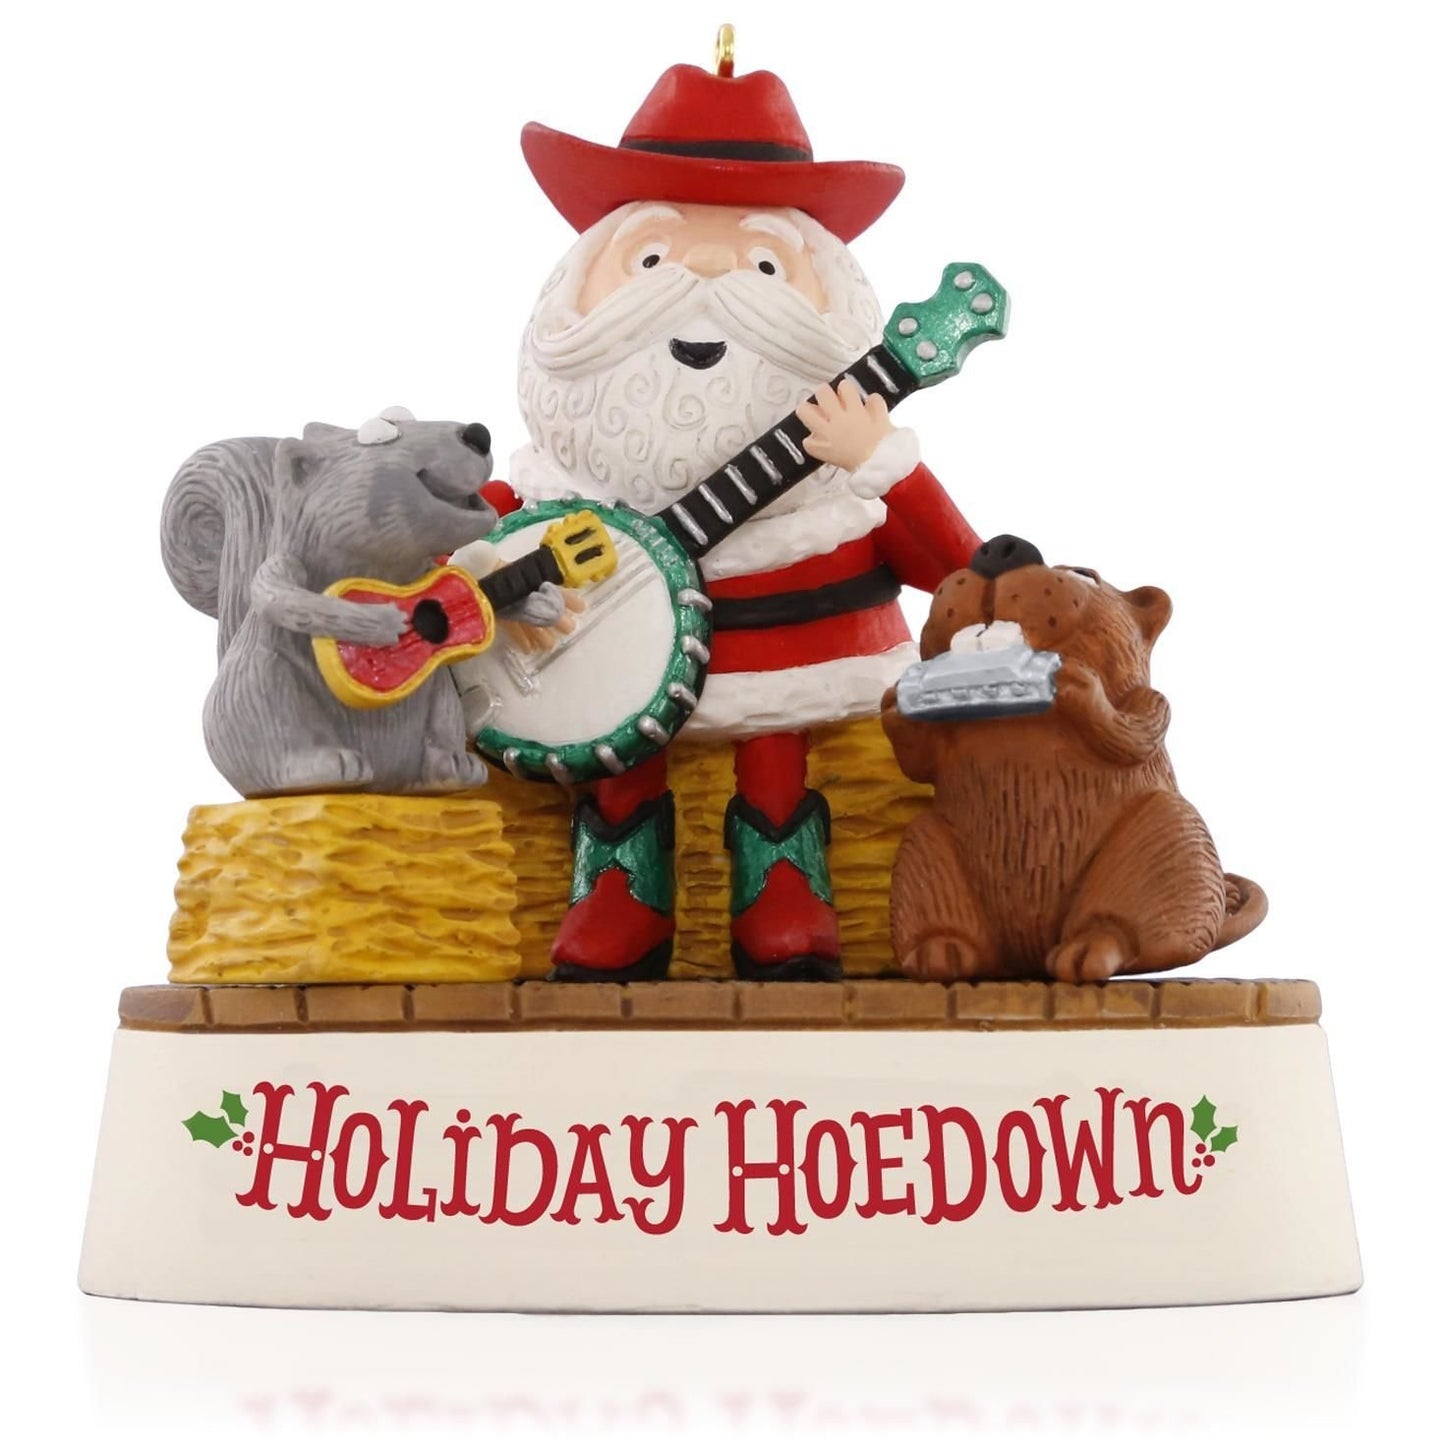 Holiday Hoedown Santa and Friends Musical Jingle Bells Musical Ornament 2015 Hallmark